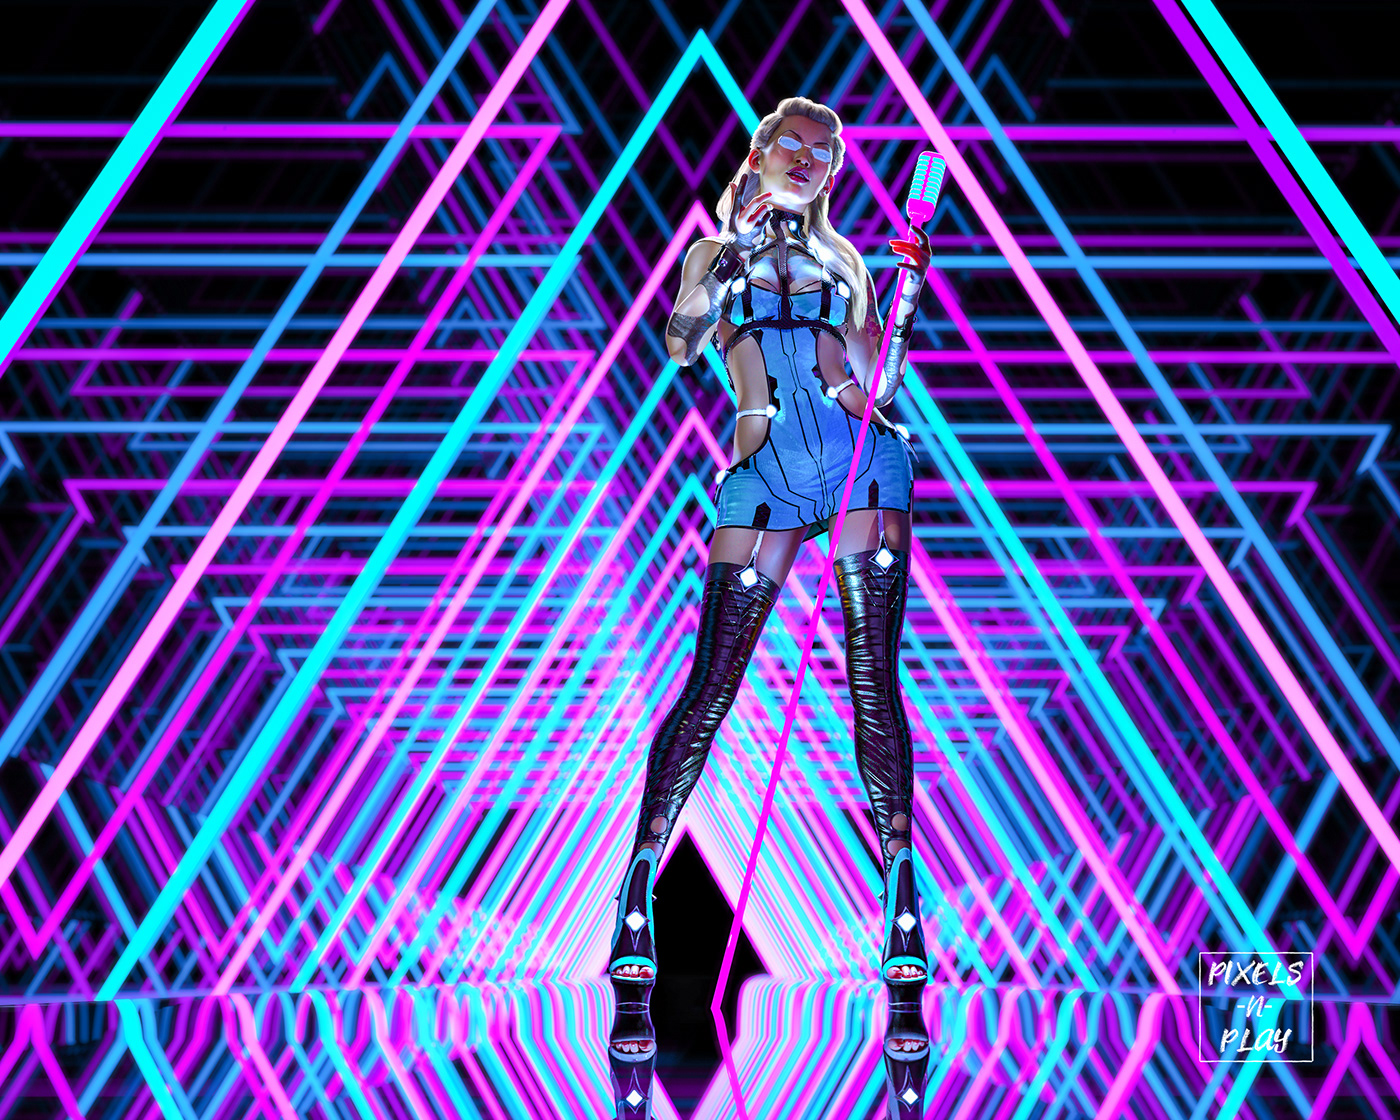 #3D ART #colorful #cyberpunk #dance #fanproject #Future #idol #music #neon